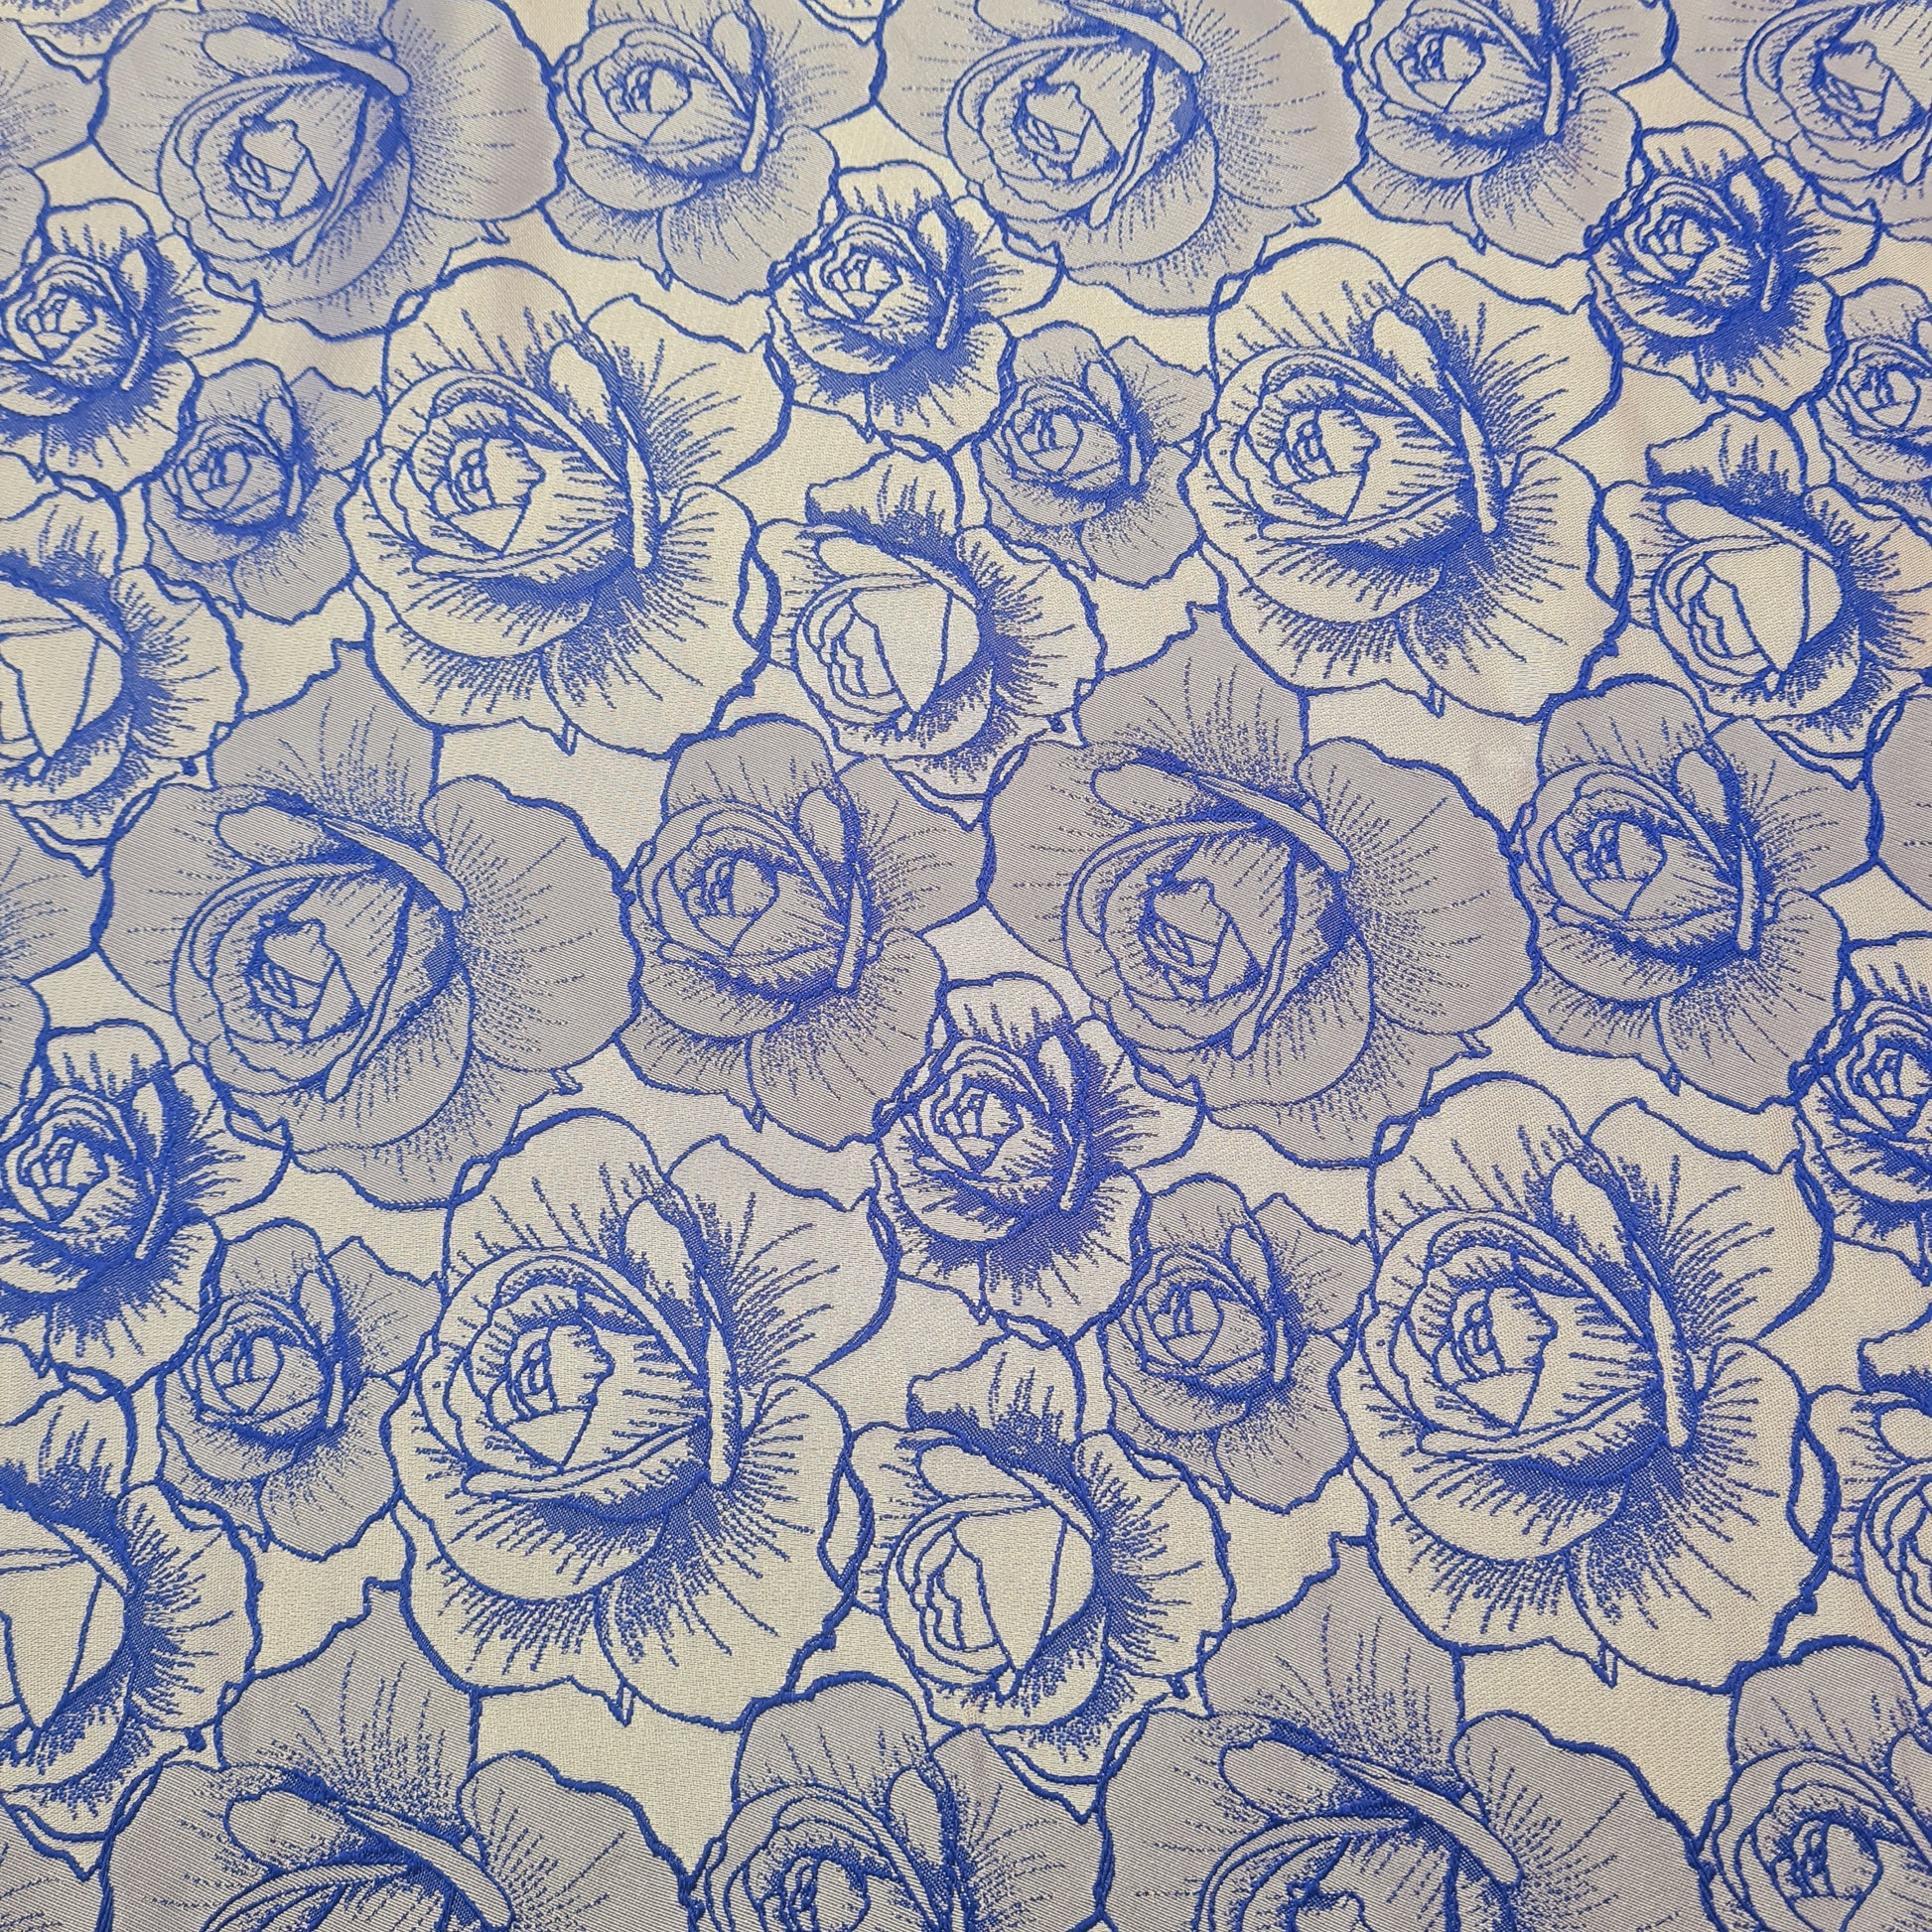 Blue Floral Brocade Jacquard Fabric - TradeUNO